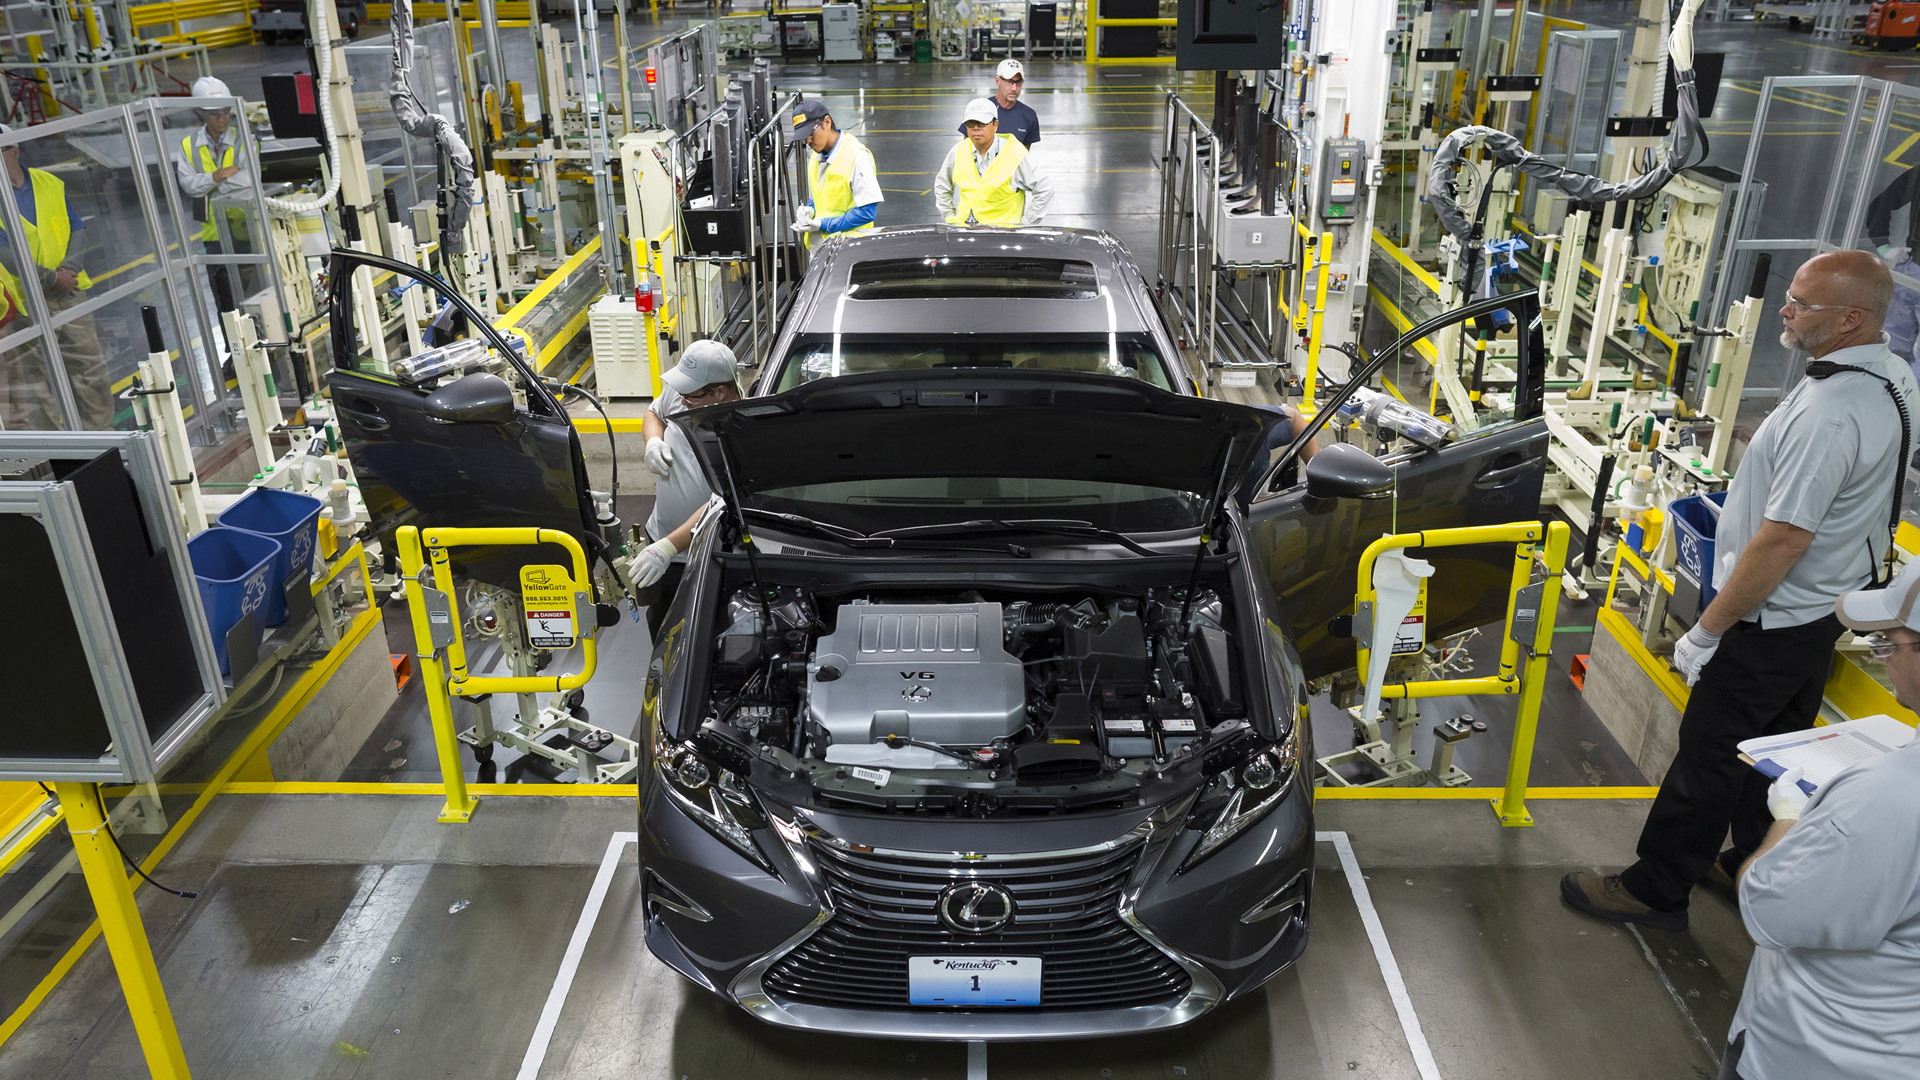 2016 Lexus ES production in Georgetown, Kentucky